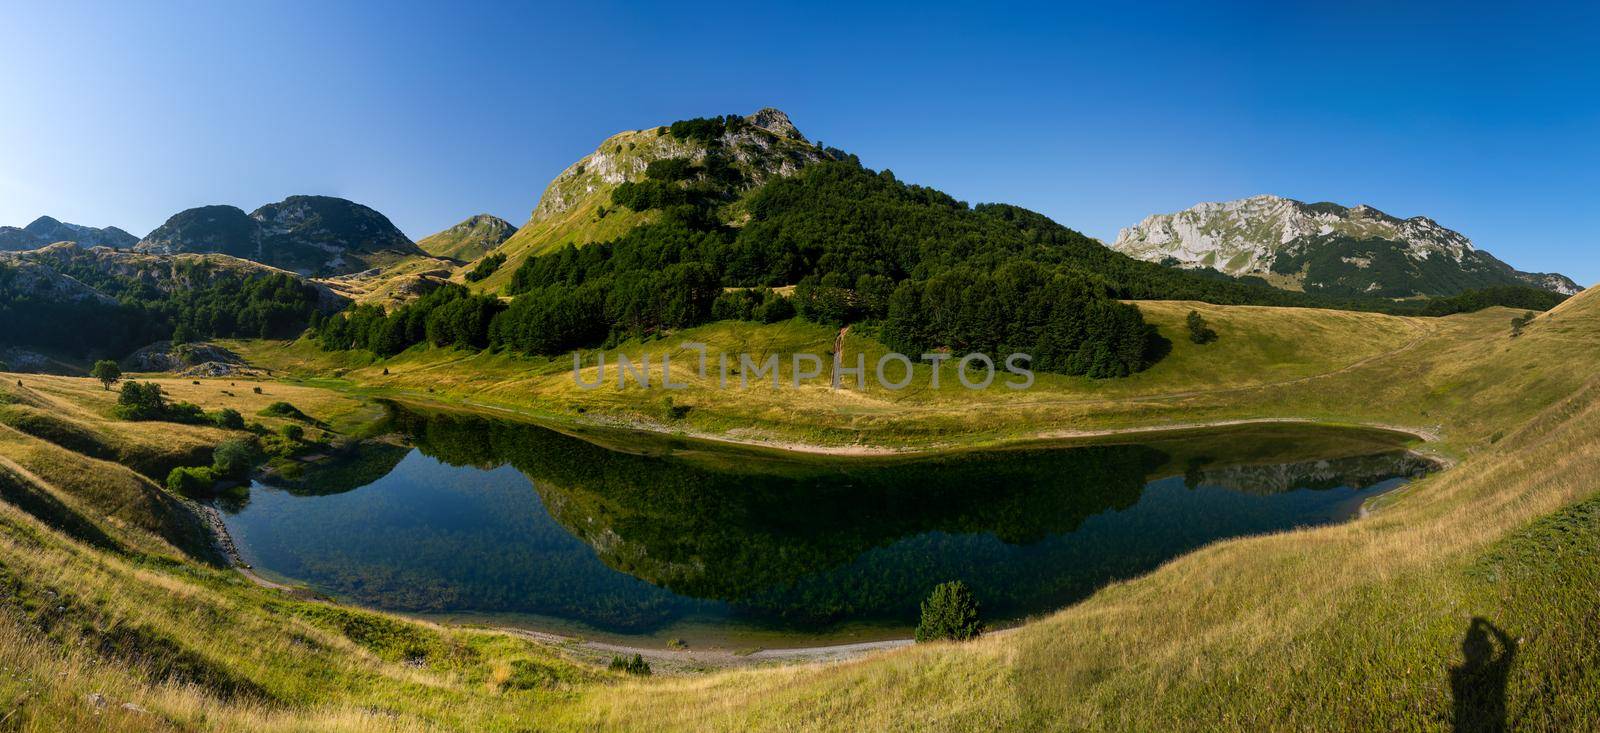 Panoramic photo of Orlovacko lake, Zelengora mountain, Dinaric Alps, Bosnia and Herzegovina